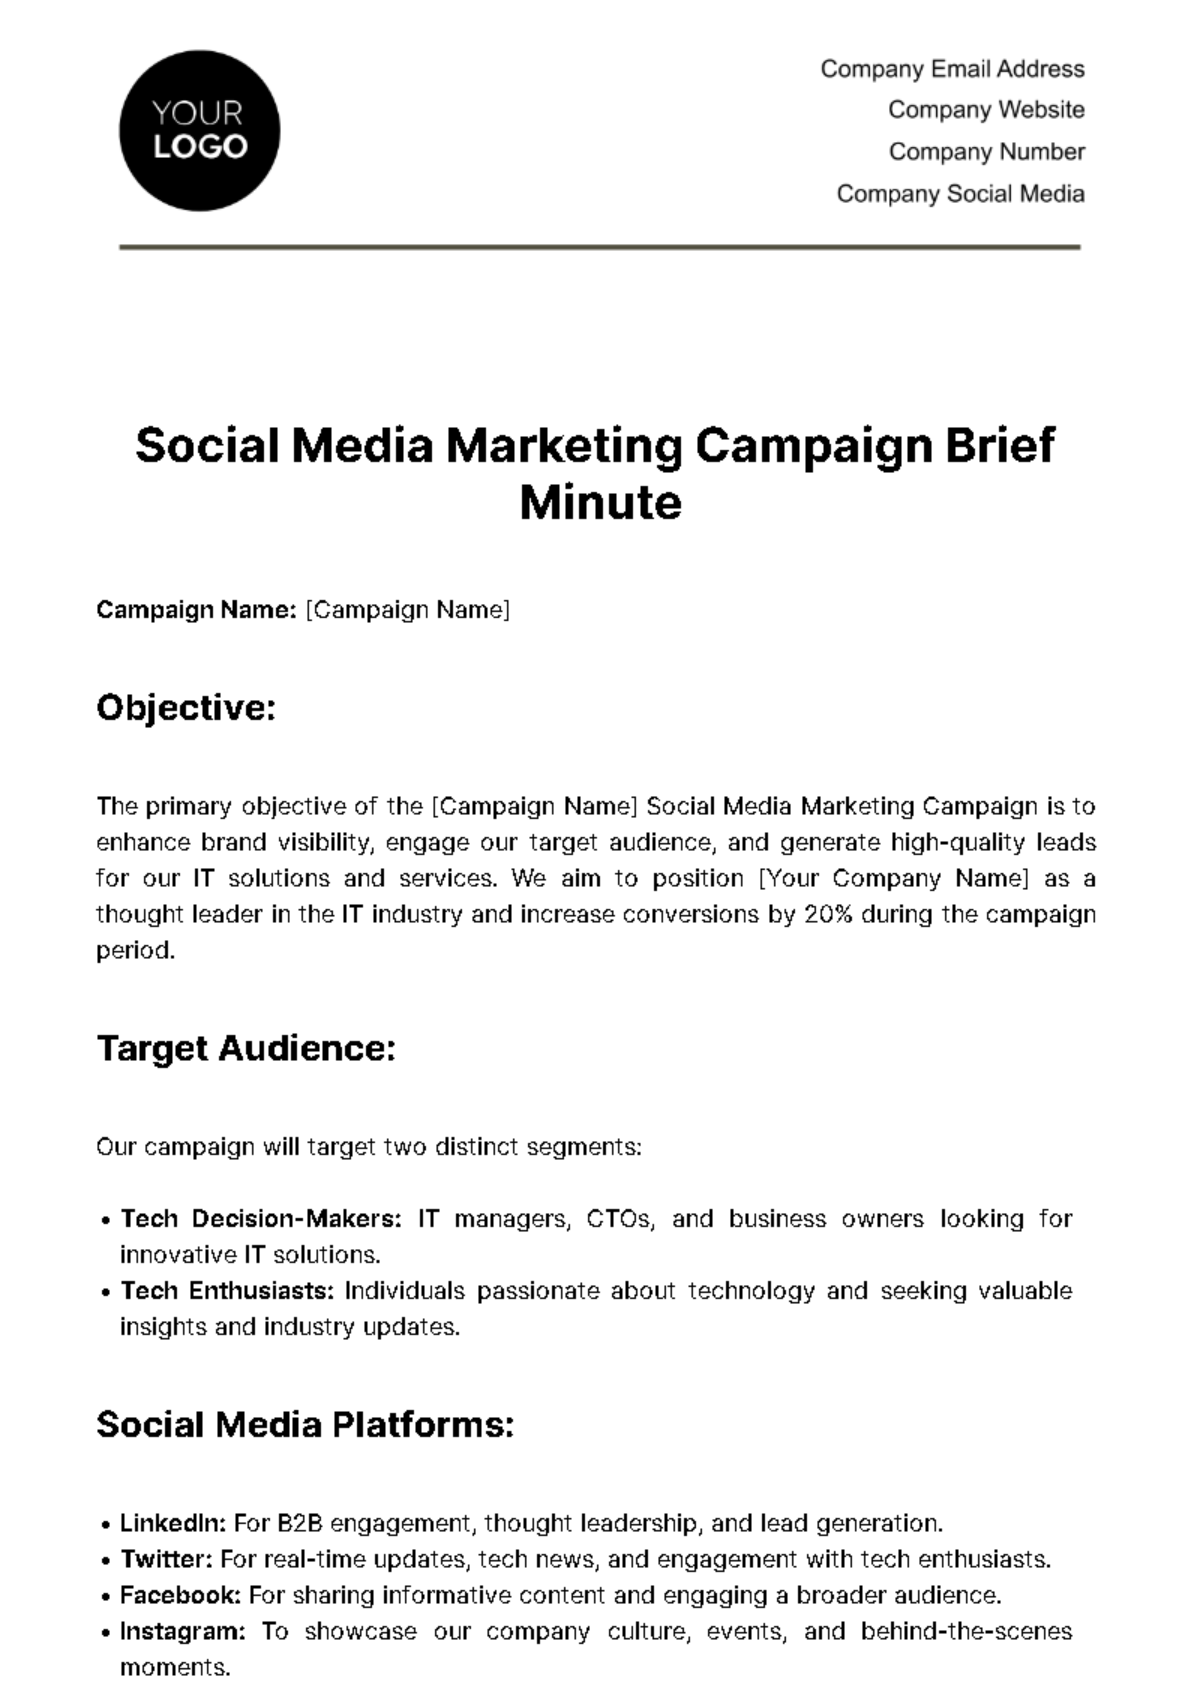 Social Media Marketing Campaign Brief Minute Template